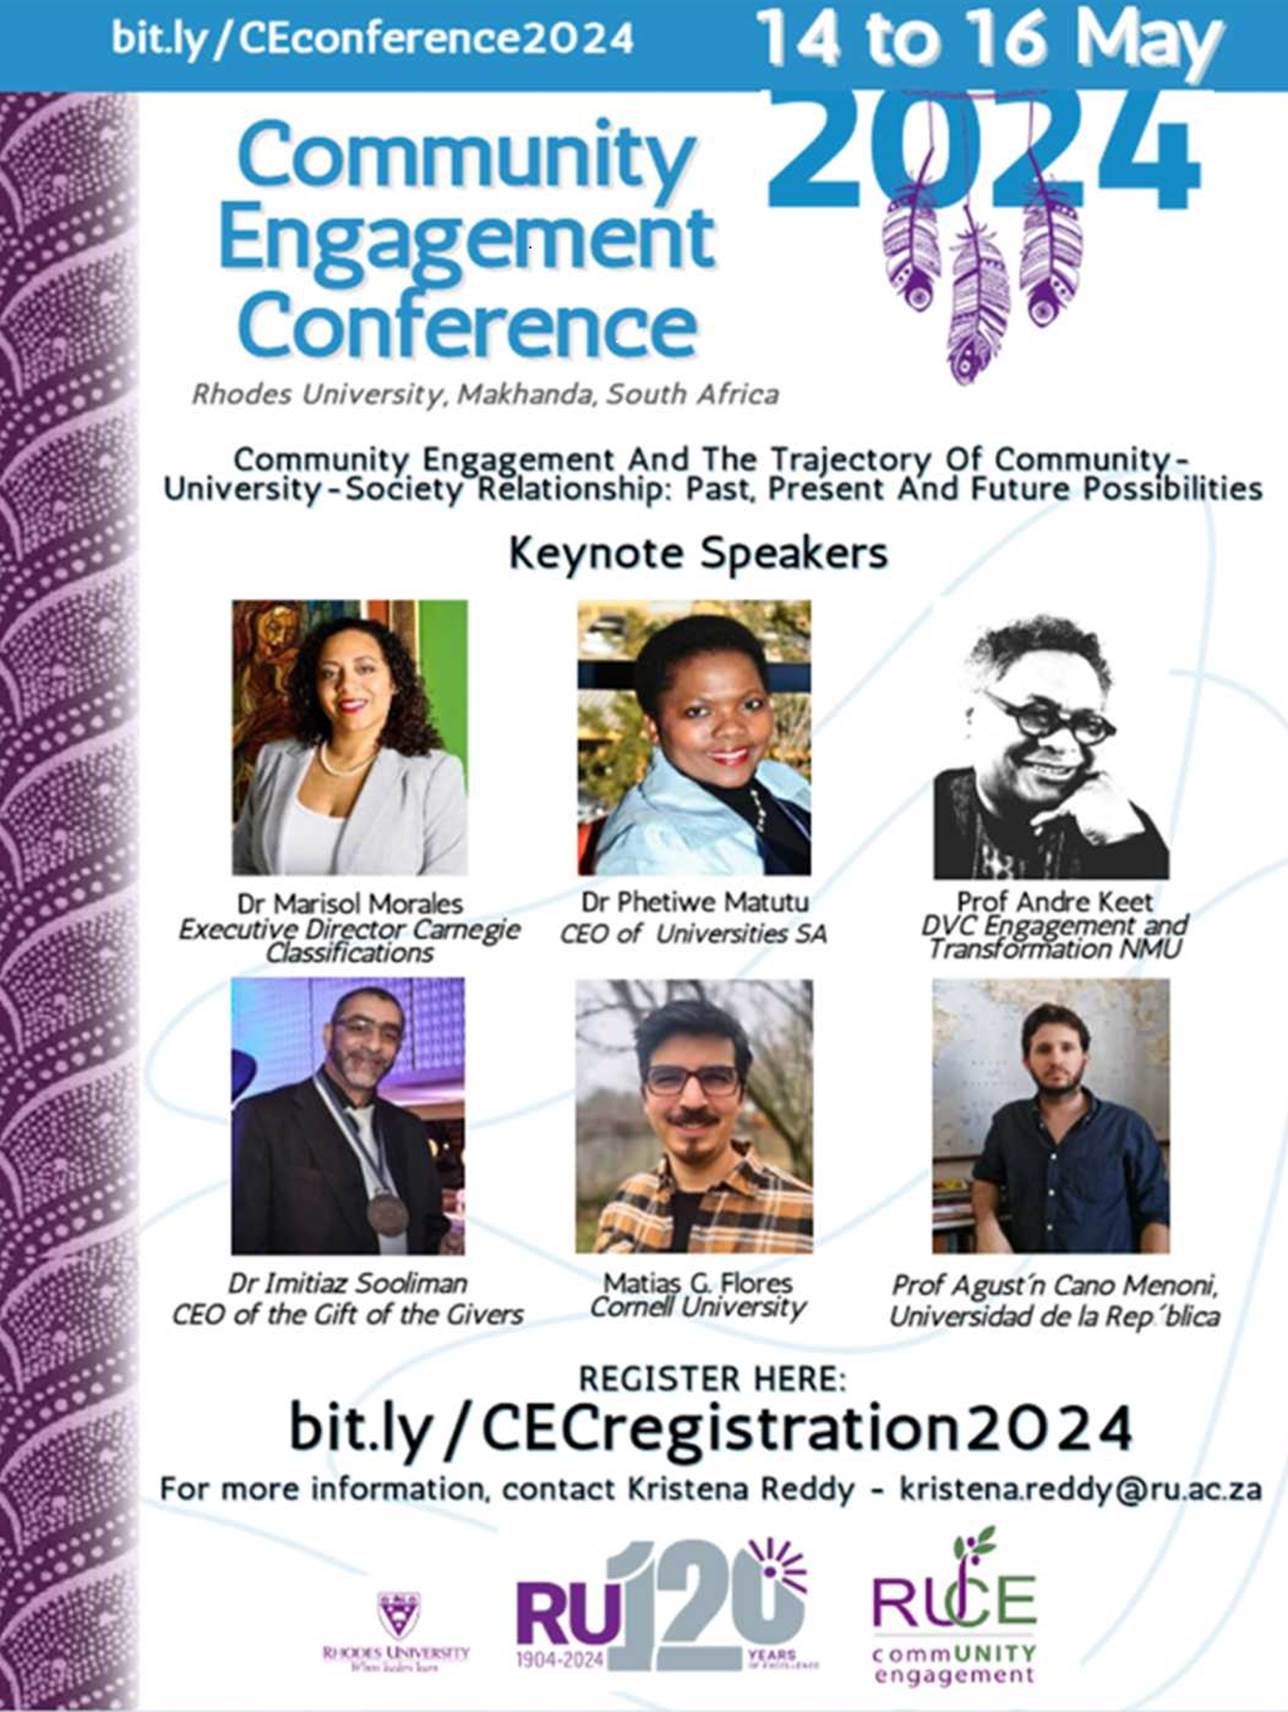 Community enegagement conference 2024